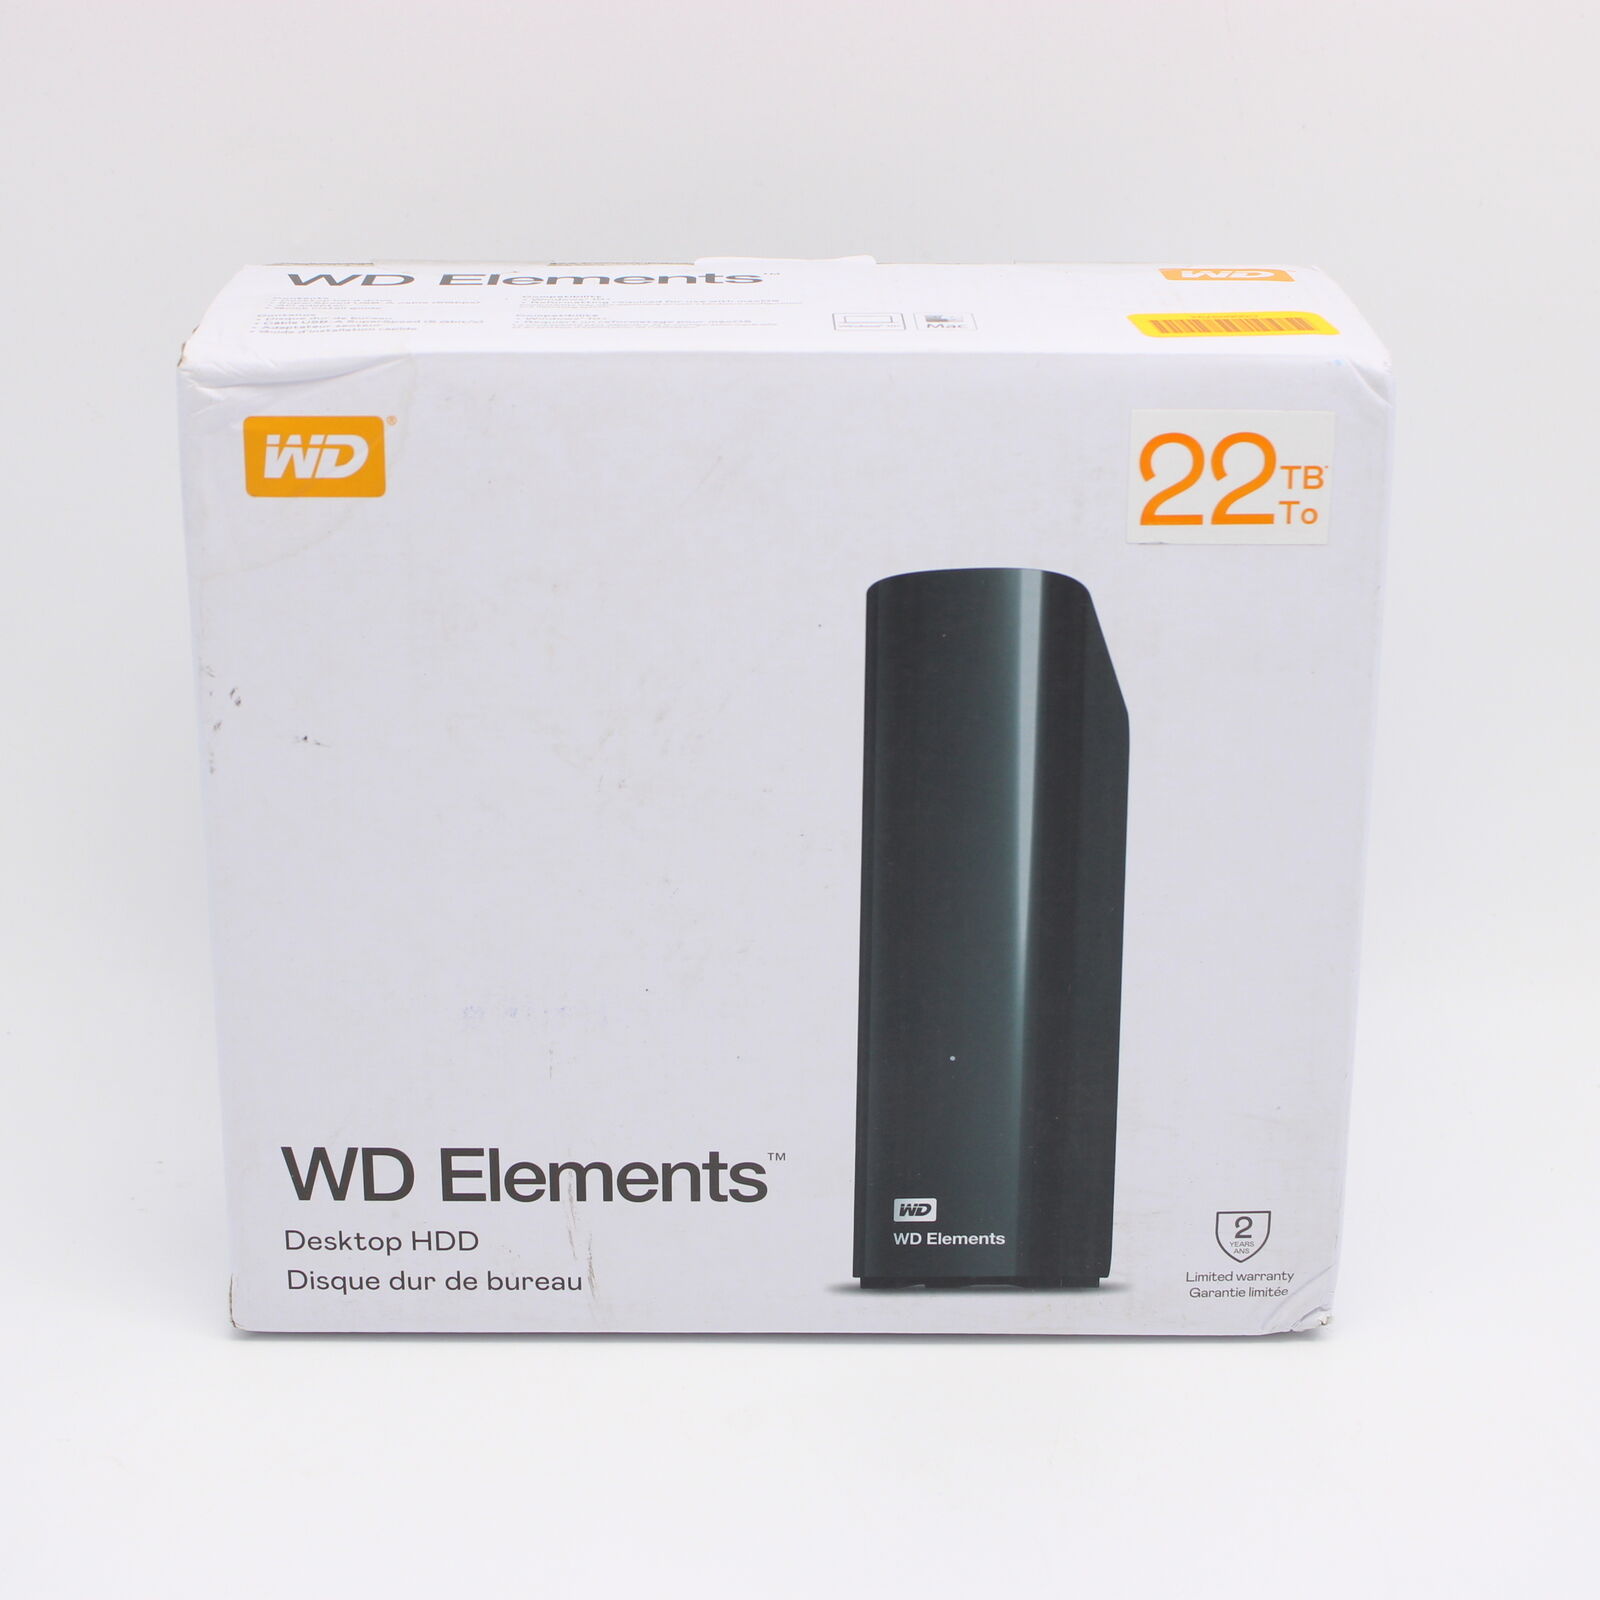 Western Digital 22TB Elements Desktop External HDD WDBWLG0220HBK-XB